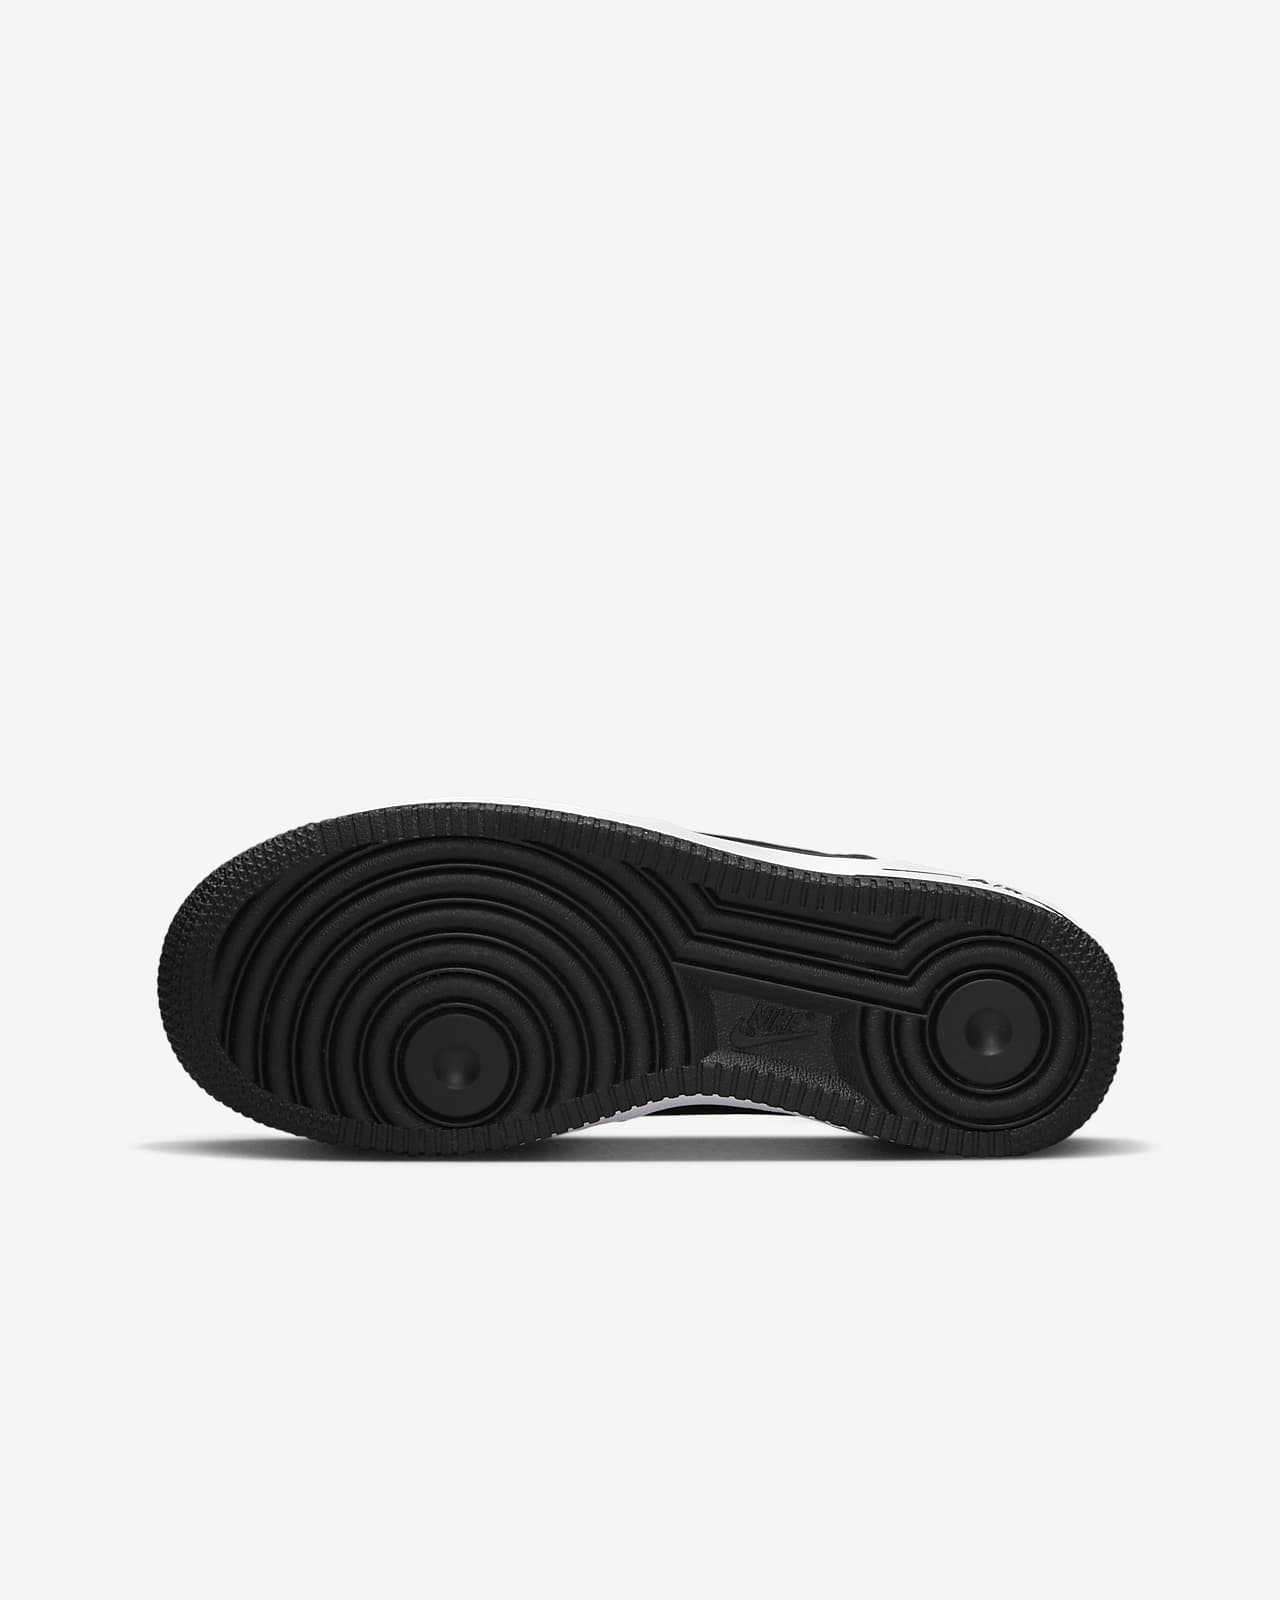 Nike Force 1 LV8 Black/Iron Grey/White Toddler Boys' Shoes, Size: 4